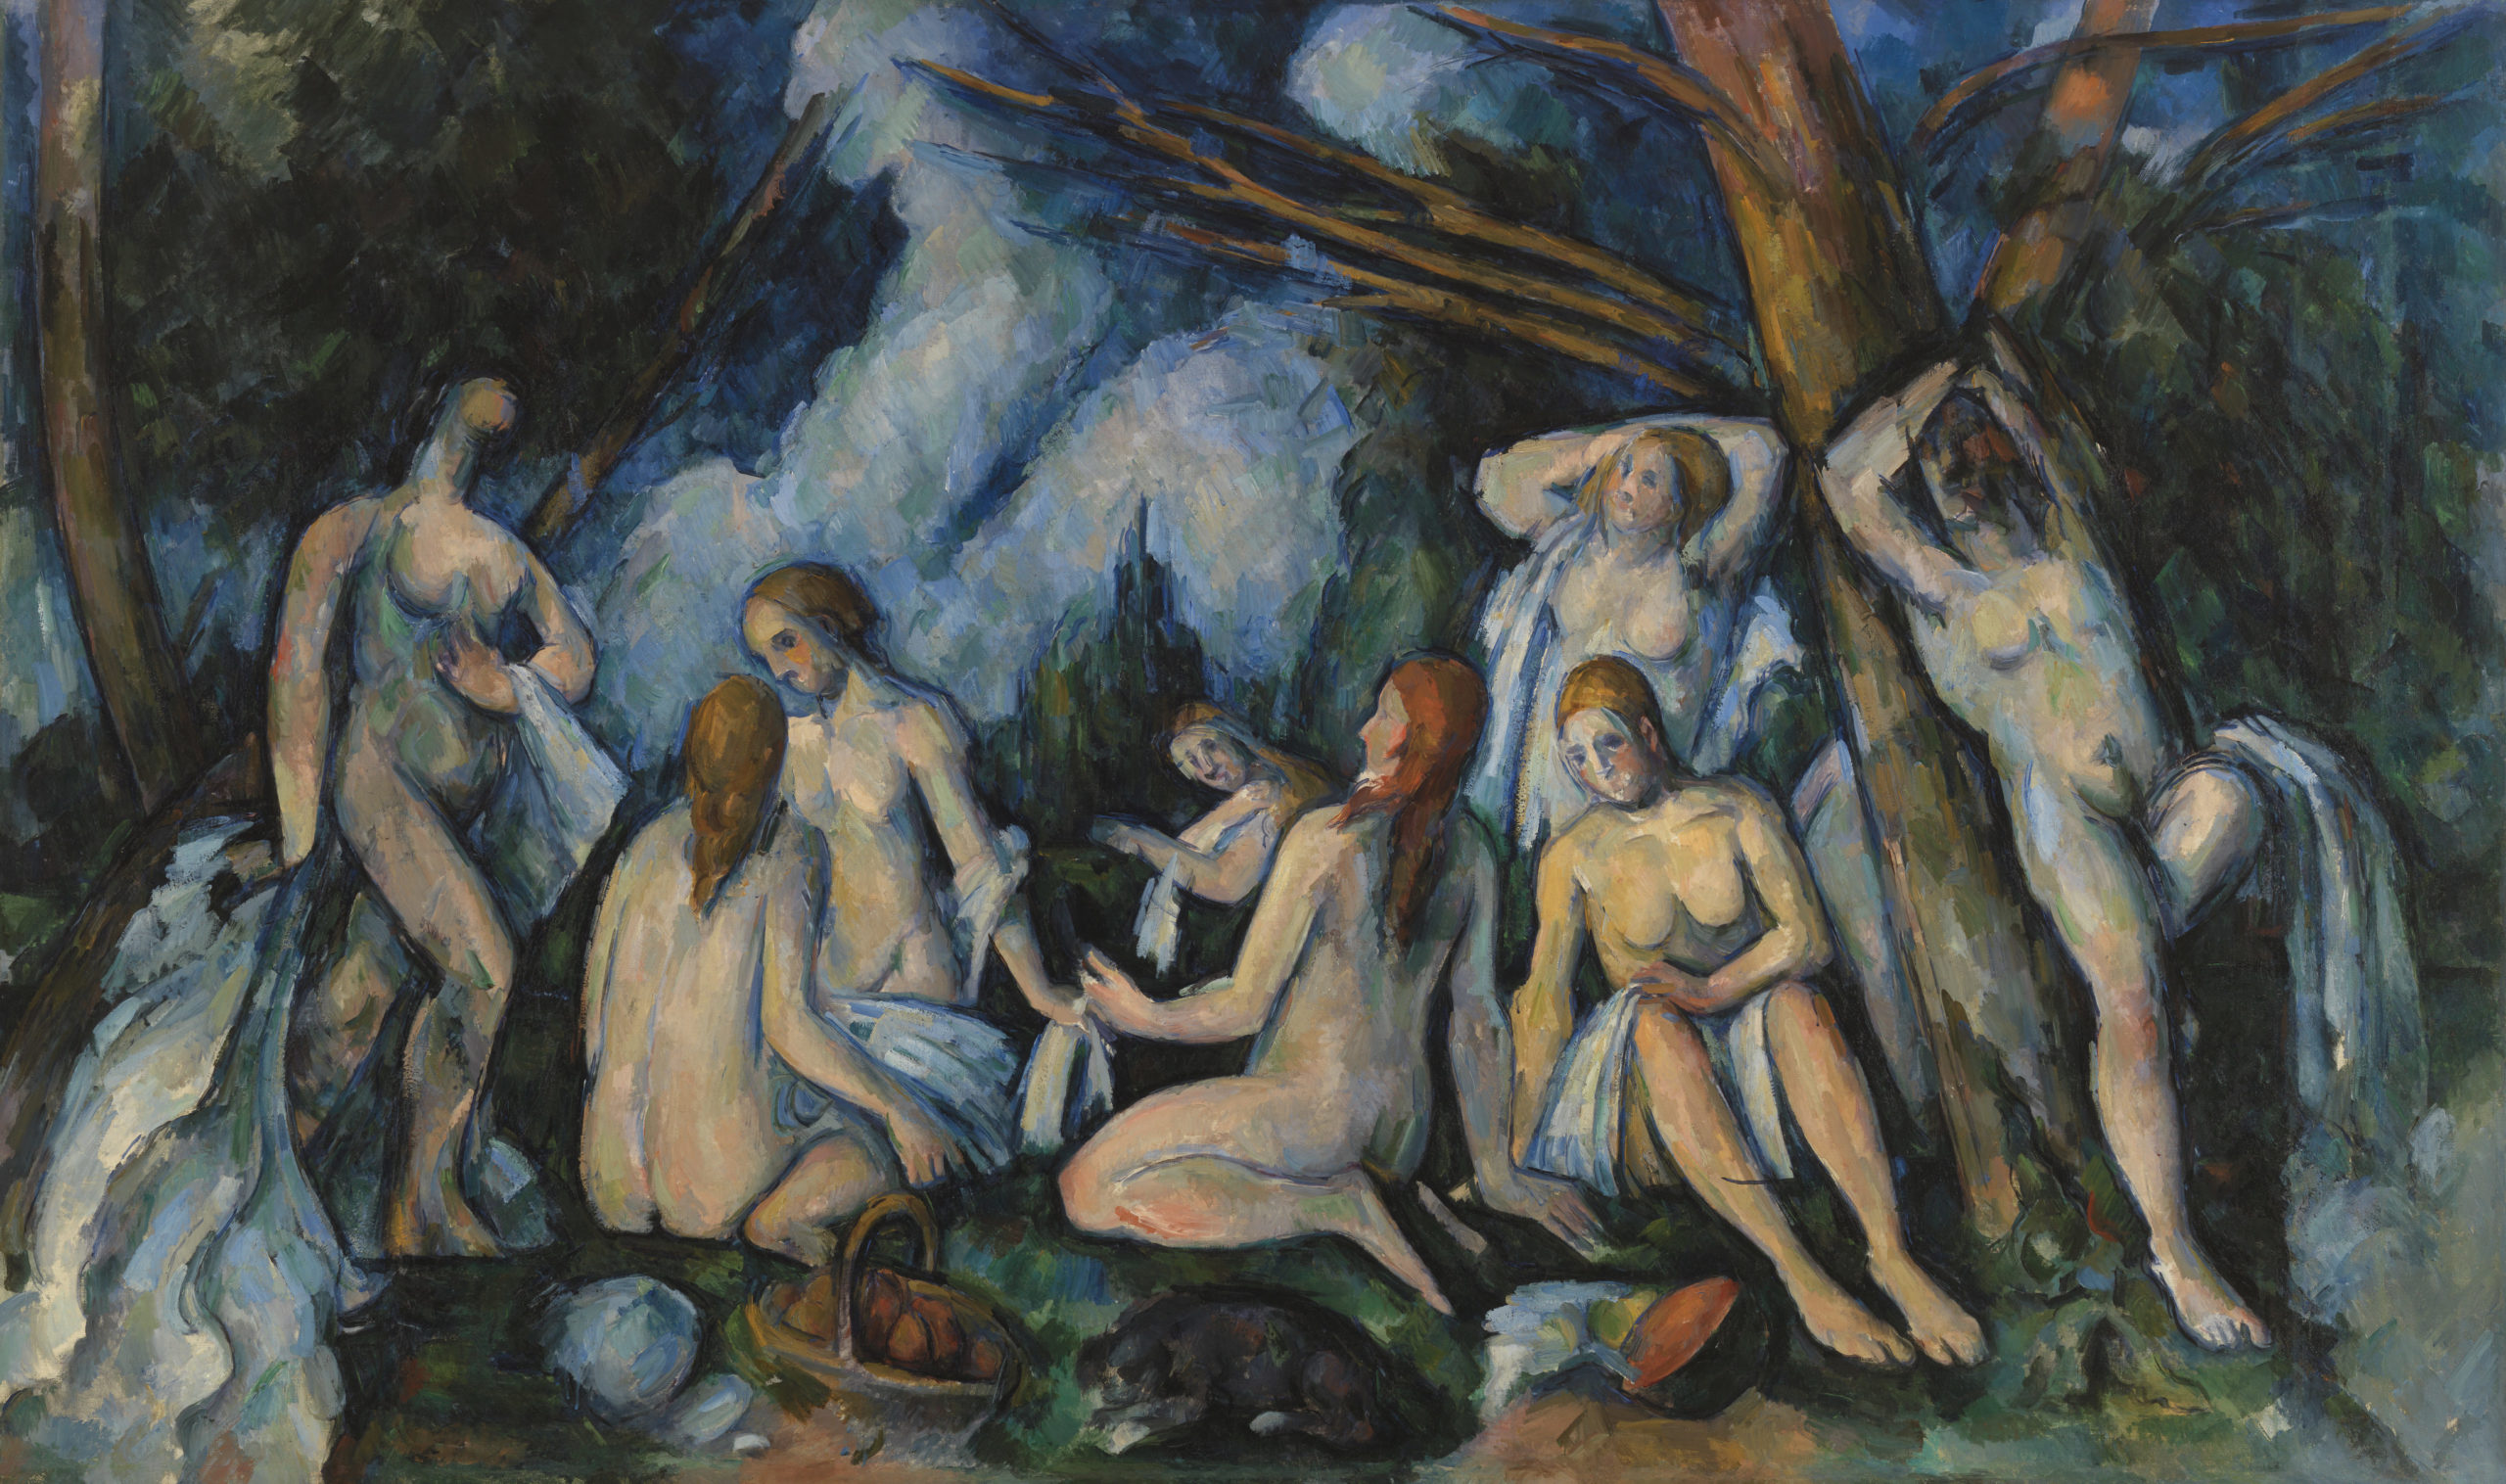 Cézanne’s watercolors